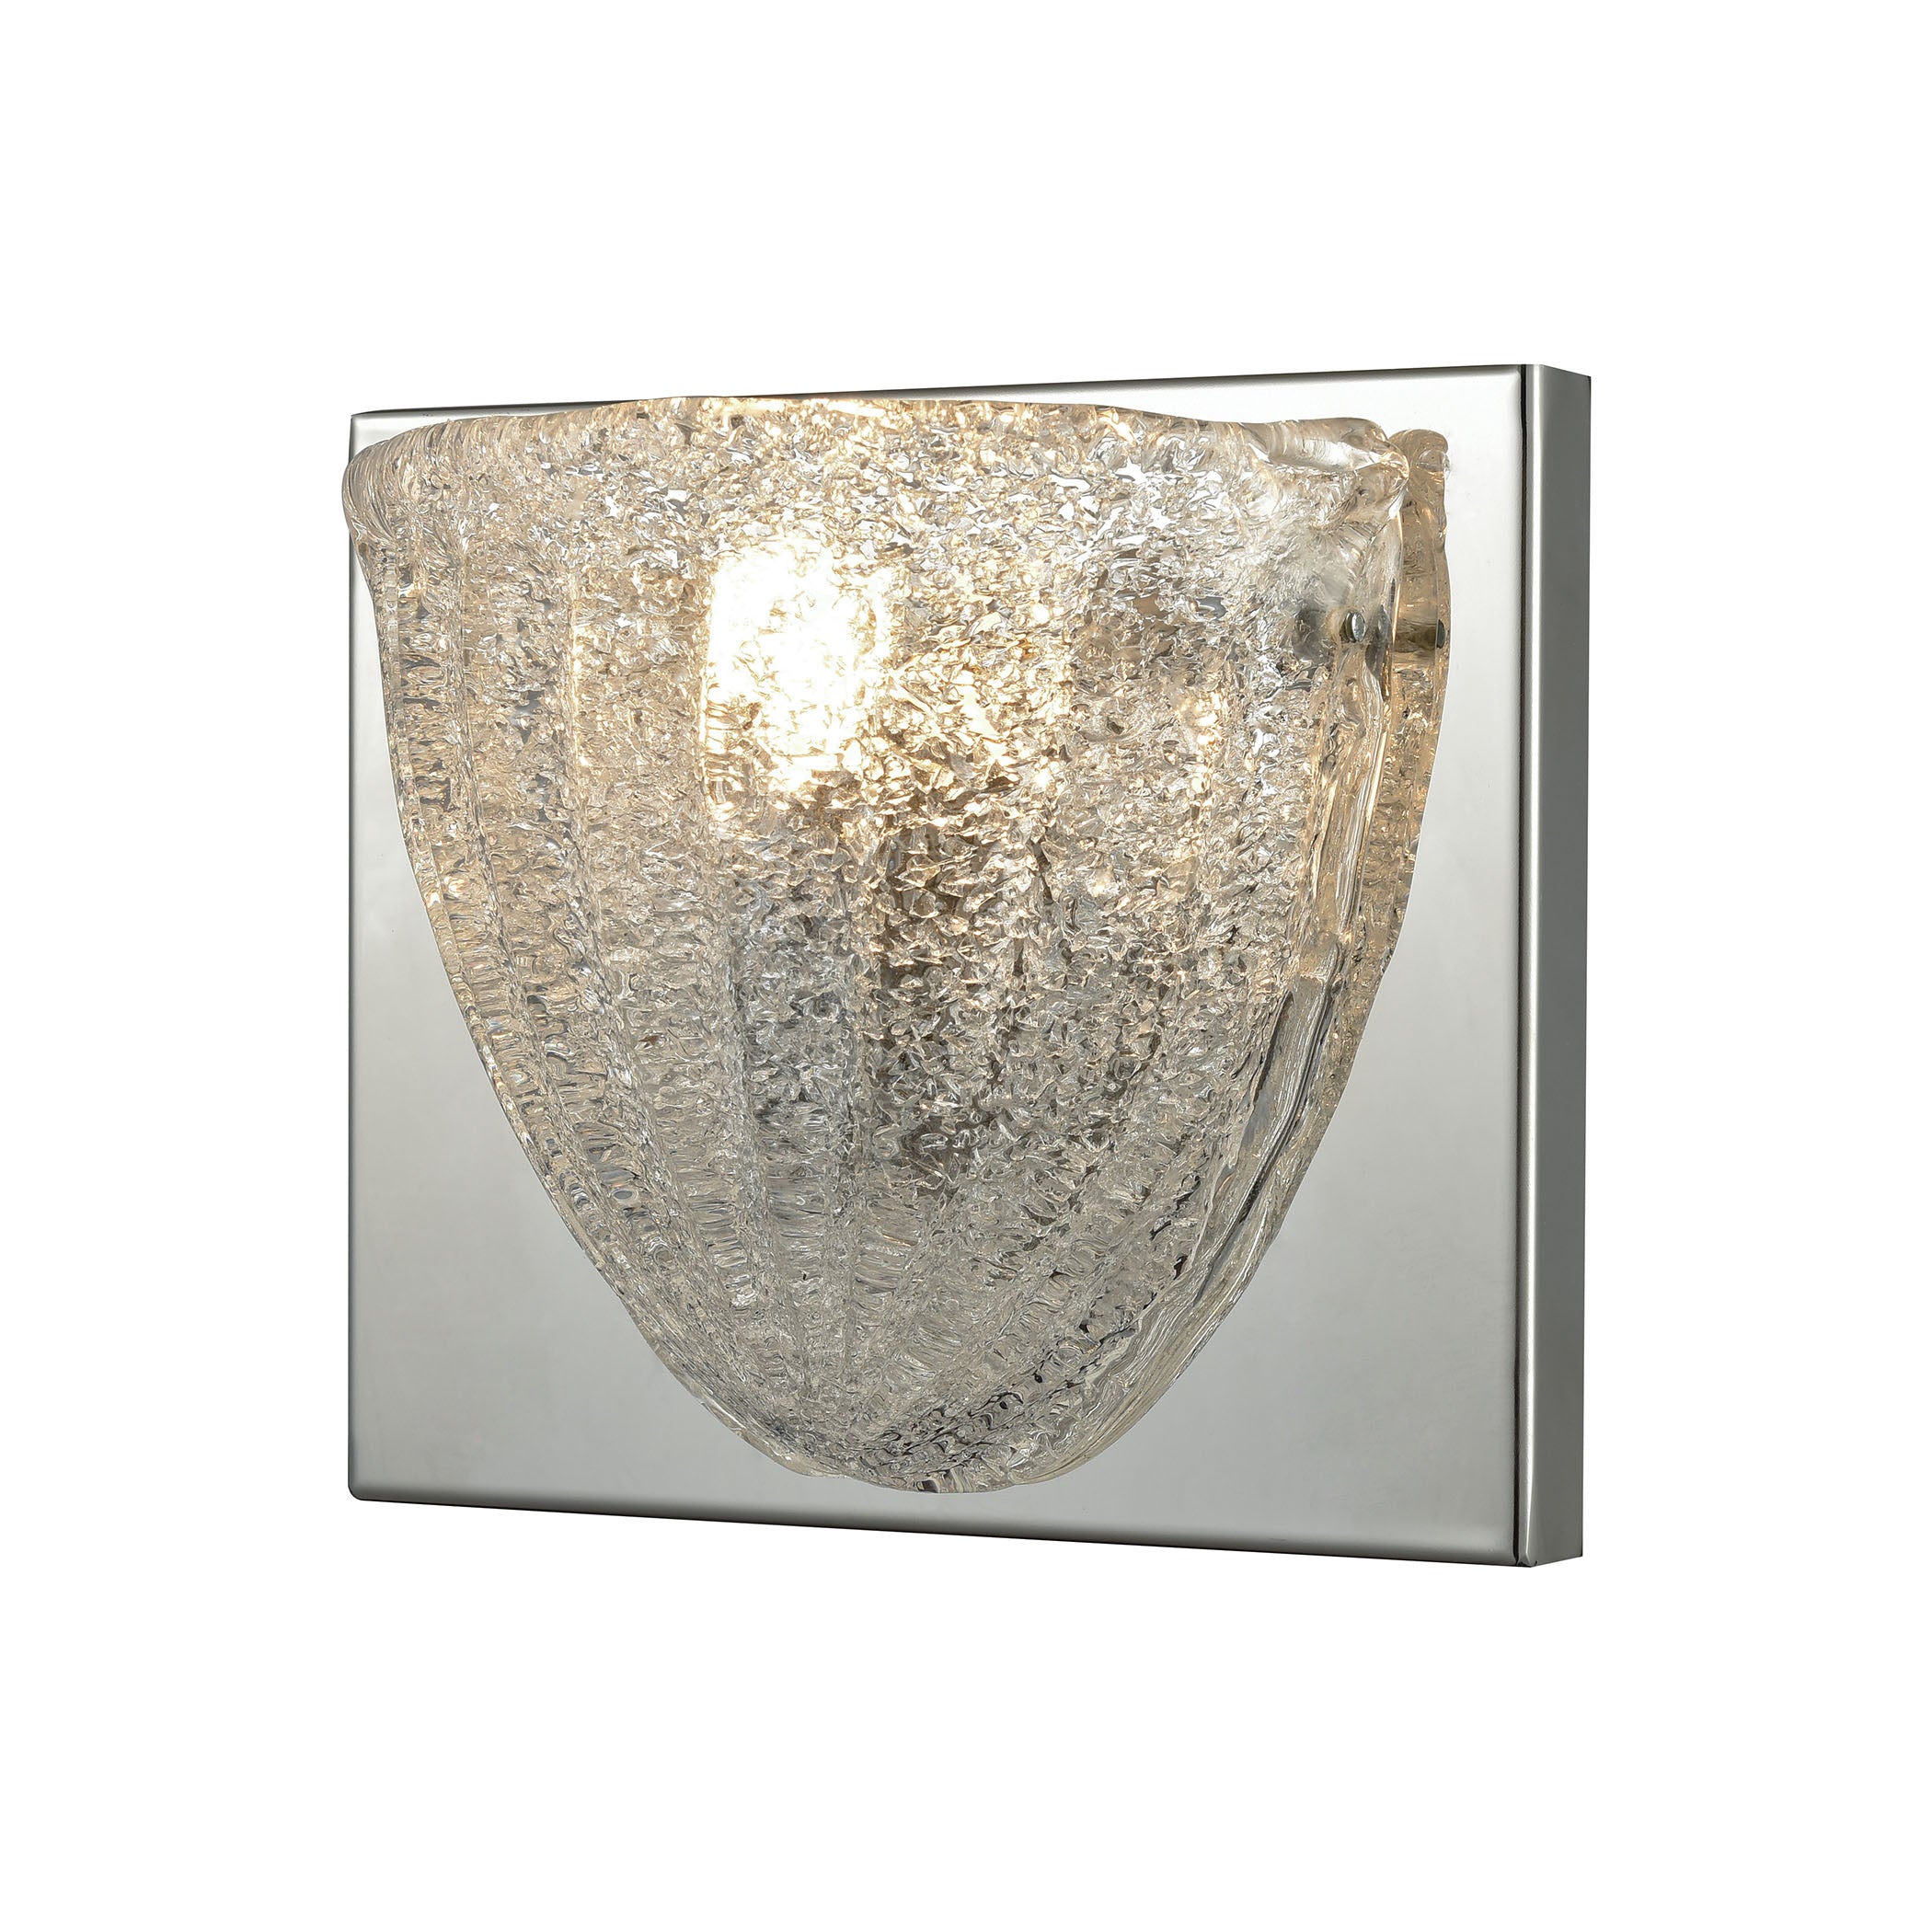 ELK Lighting 10725/1 Verannis 1-Light Vanity Sconce in Polished Chrome with Hand-formed Clear Sugar Glass